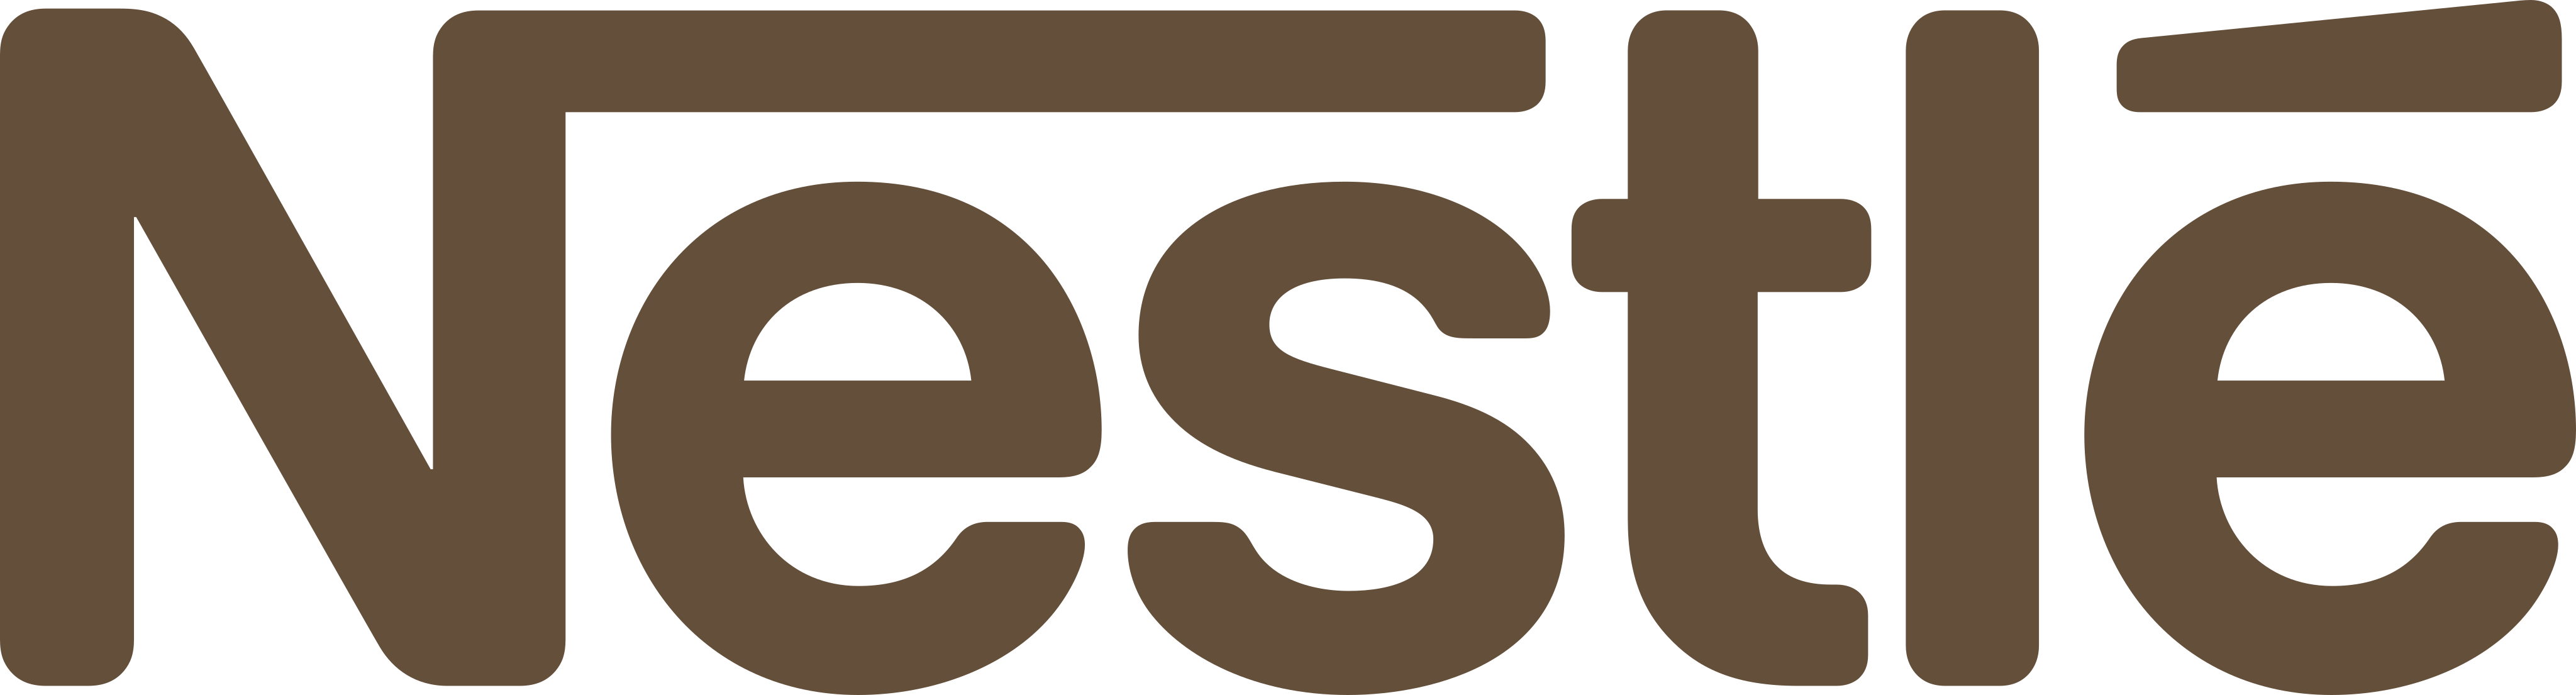 nestle logo 1 1 - Nestlé Logo